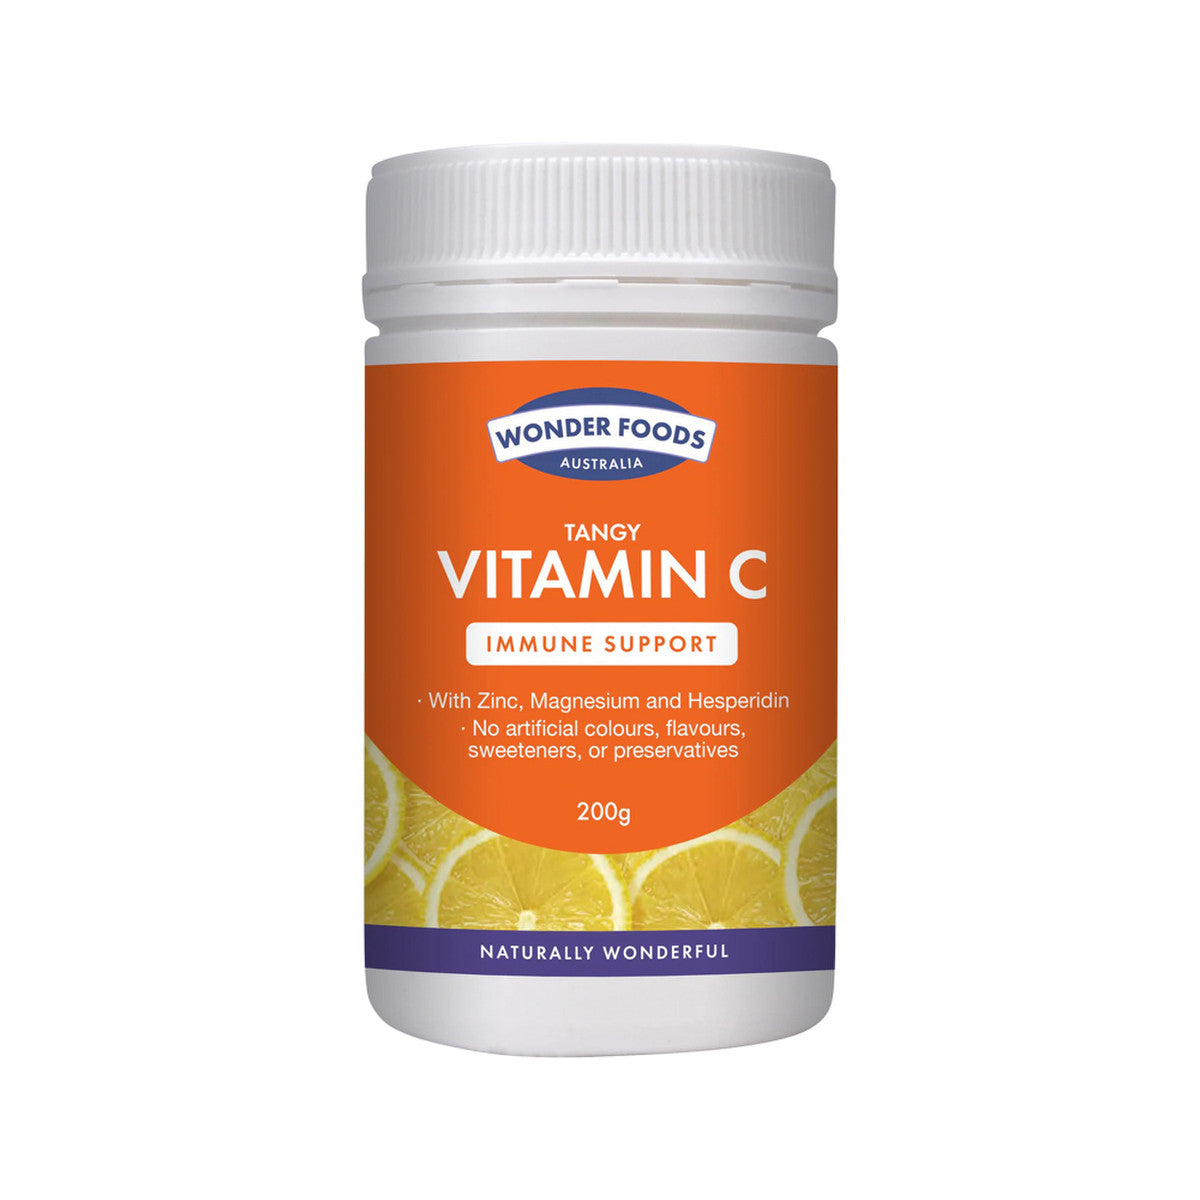 WONDER FOODS Tangy Vitamin C (Tasty Drink Powder) 200g